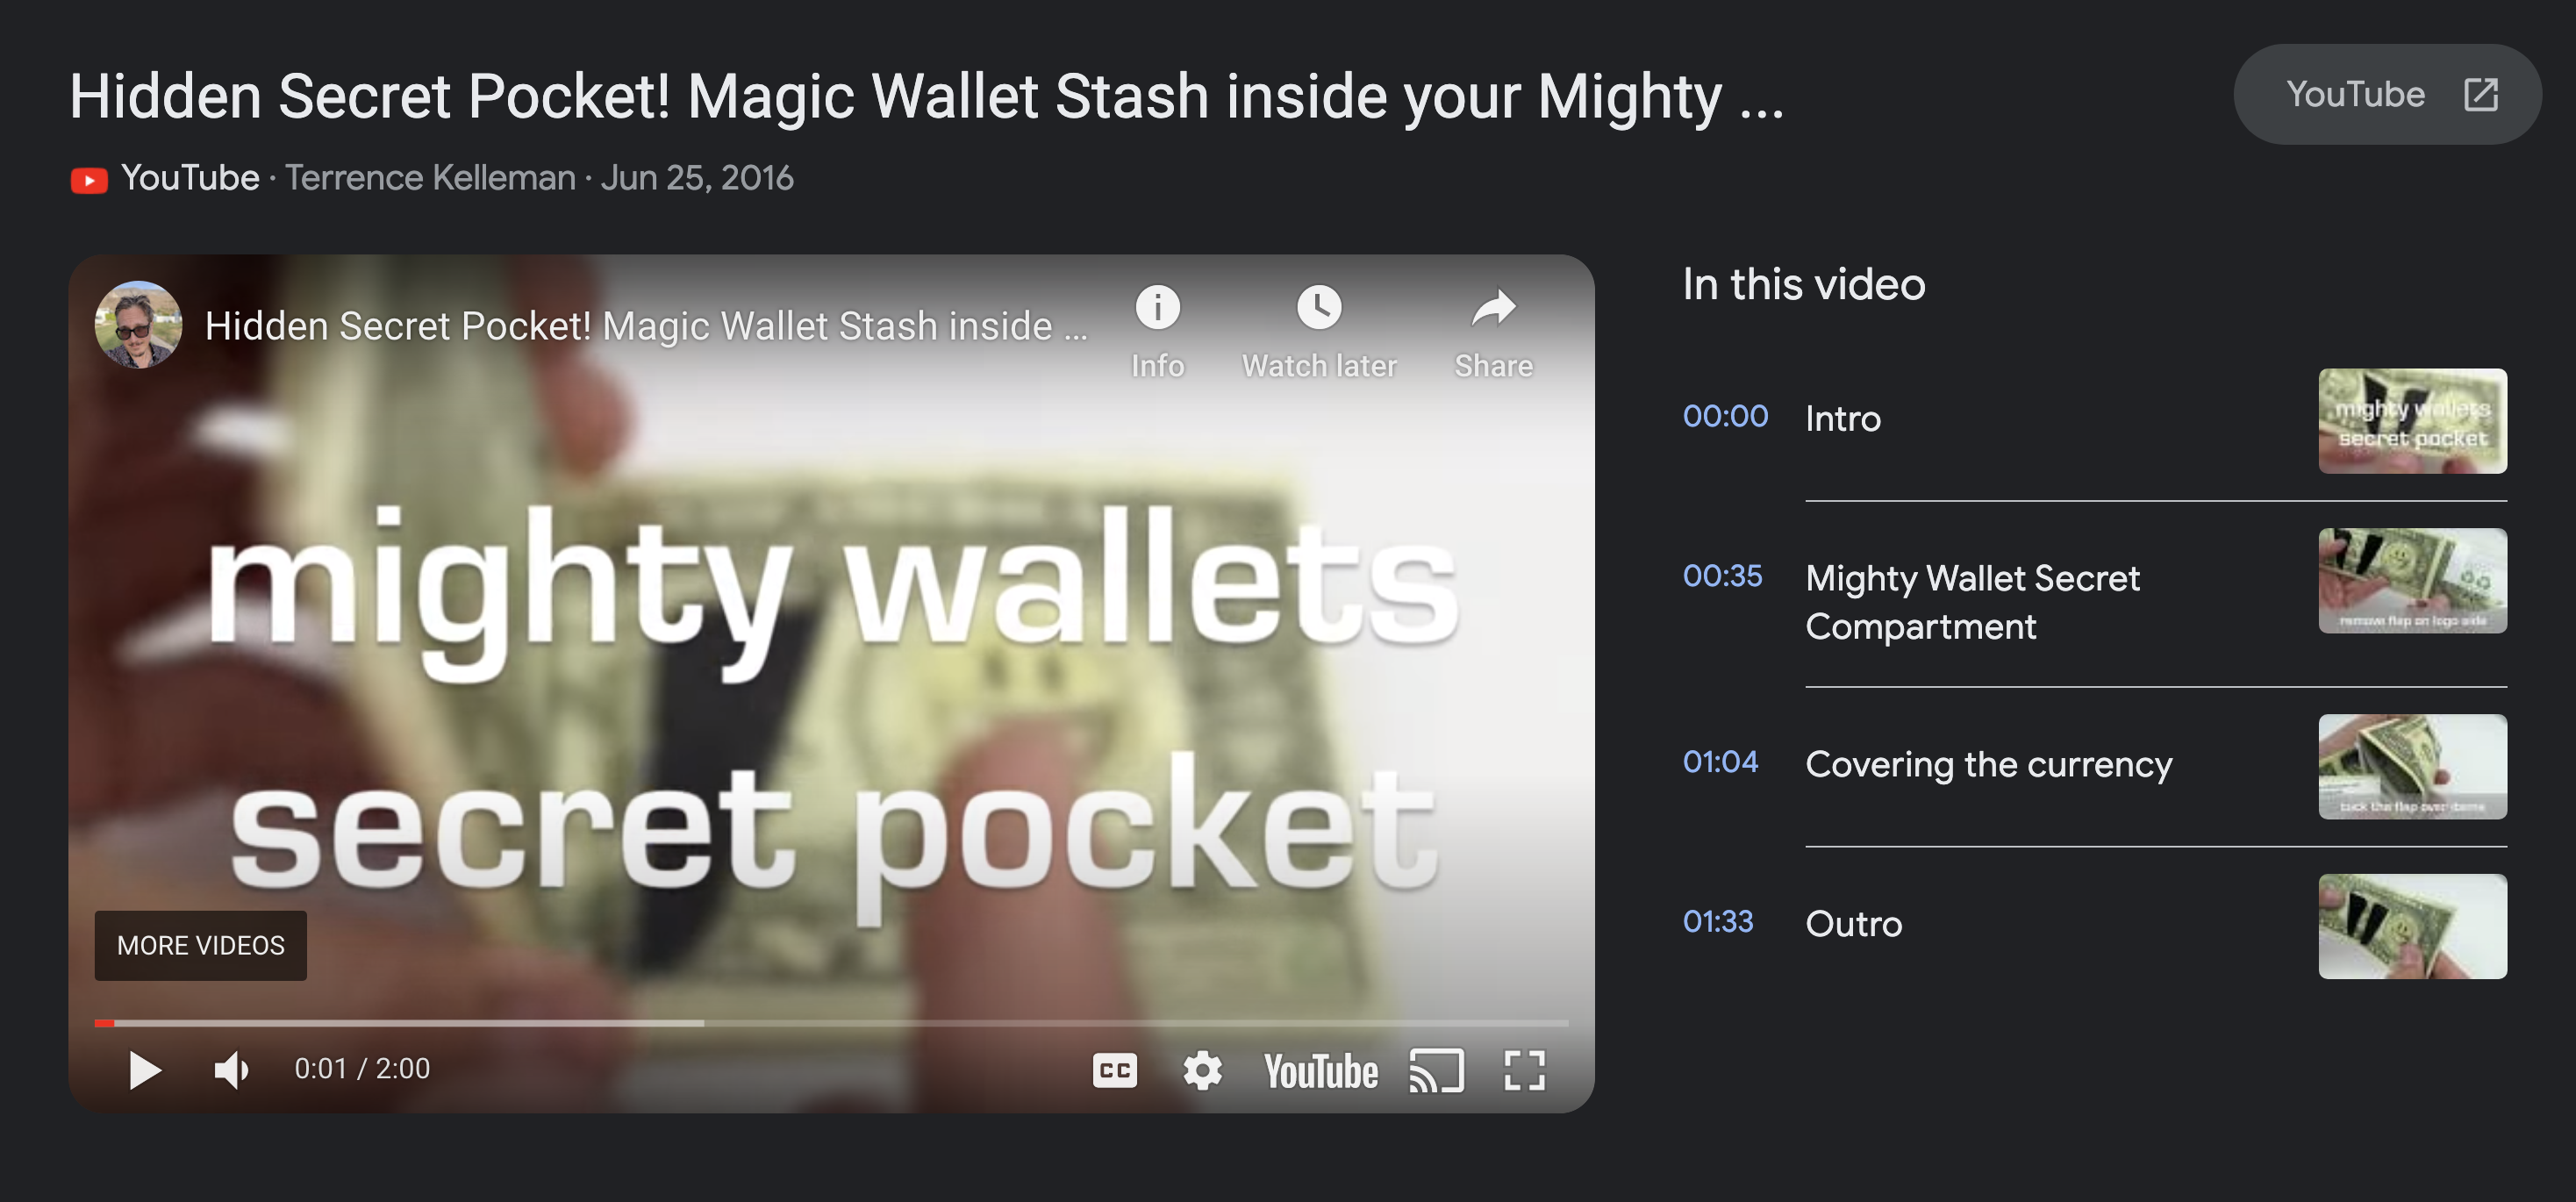 Secret hidden pocket in the Mighty Wallet